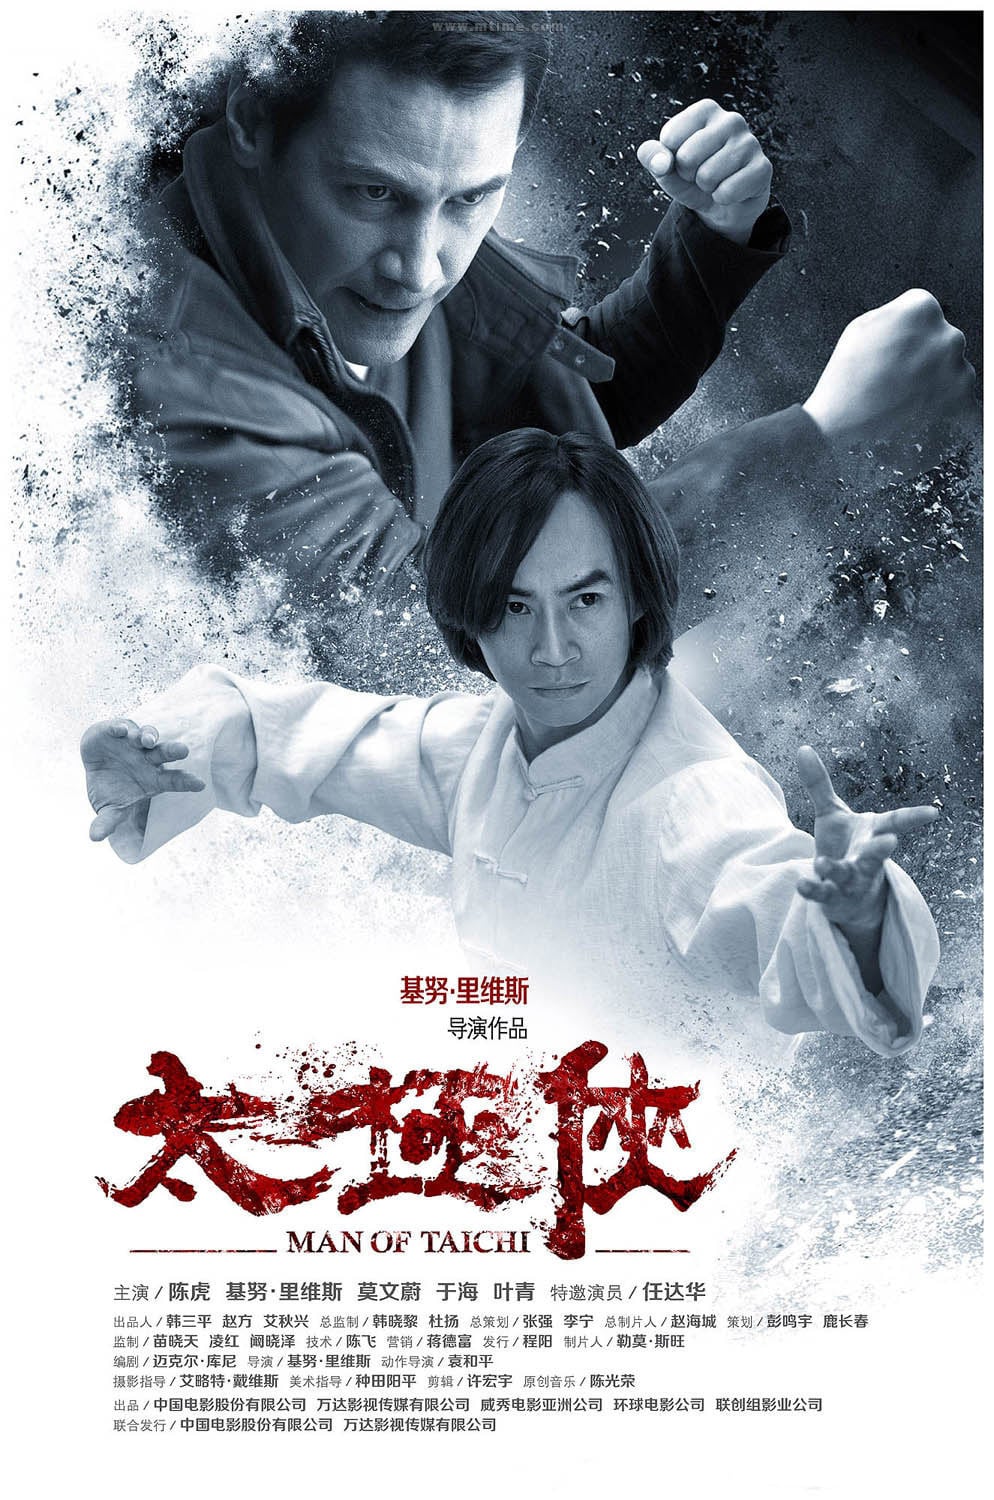 Man of Tai Chi poster